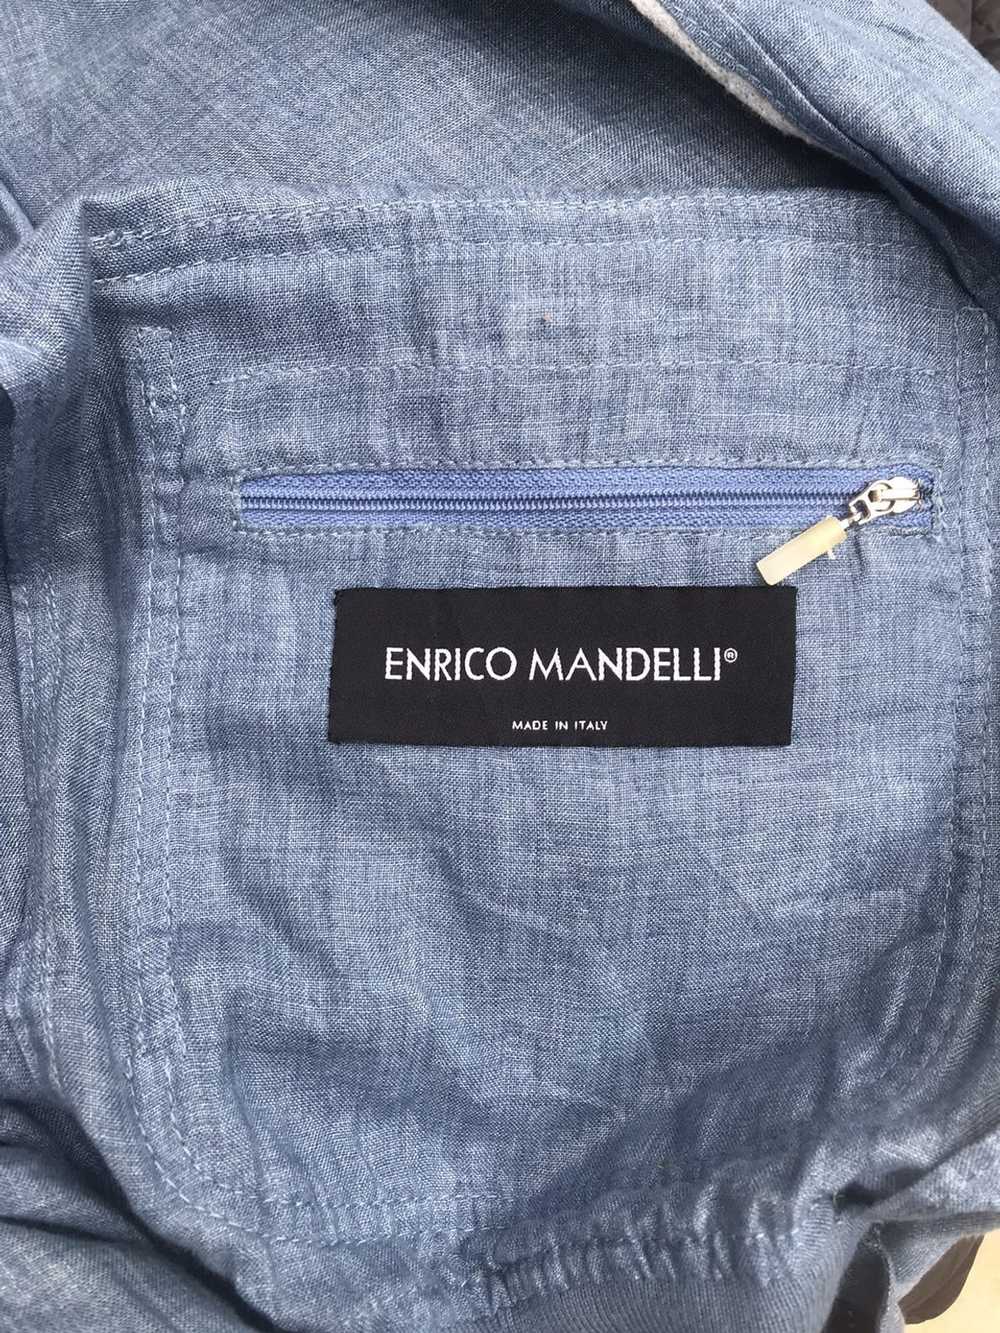 Enrico Mandelli Enrico mandelli sweater - image 6